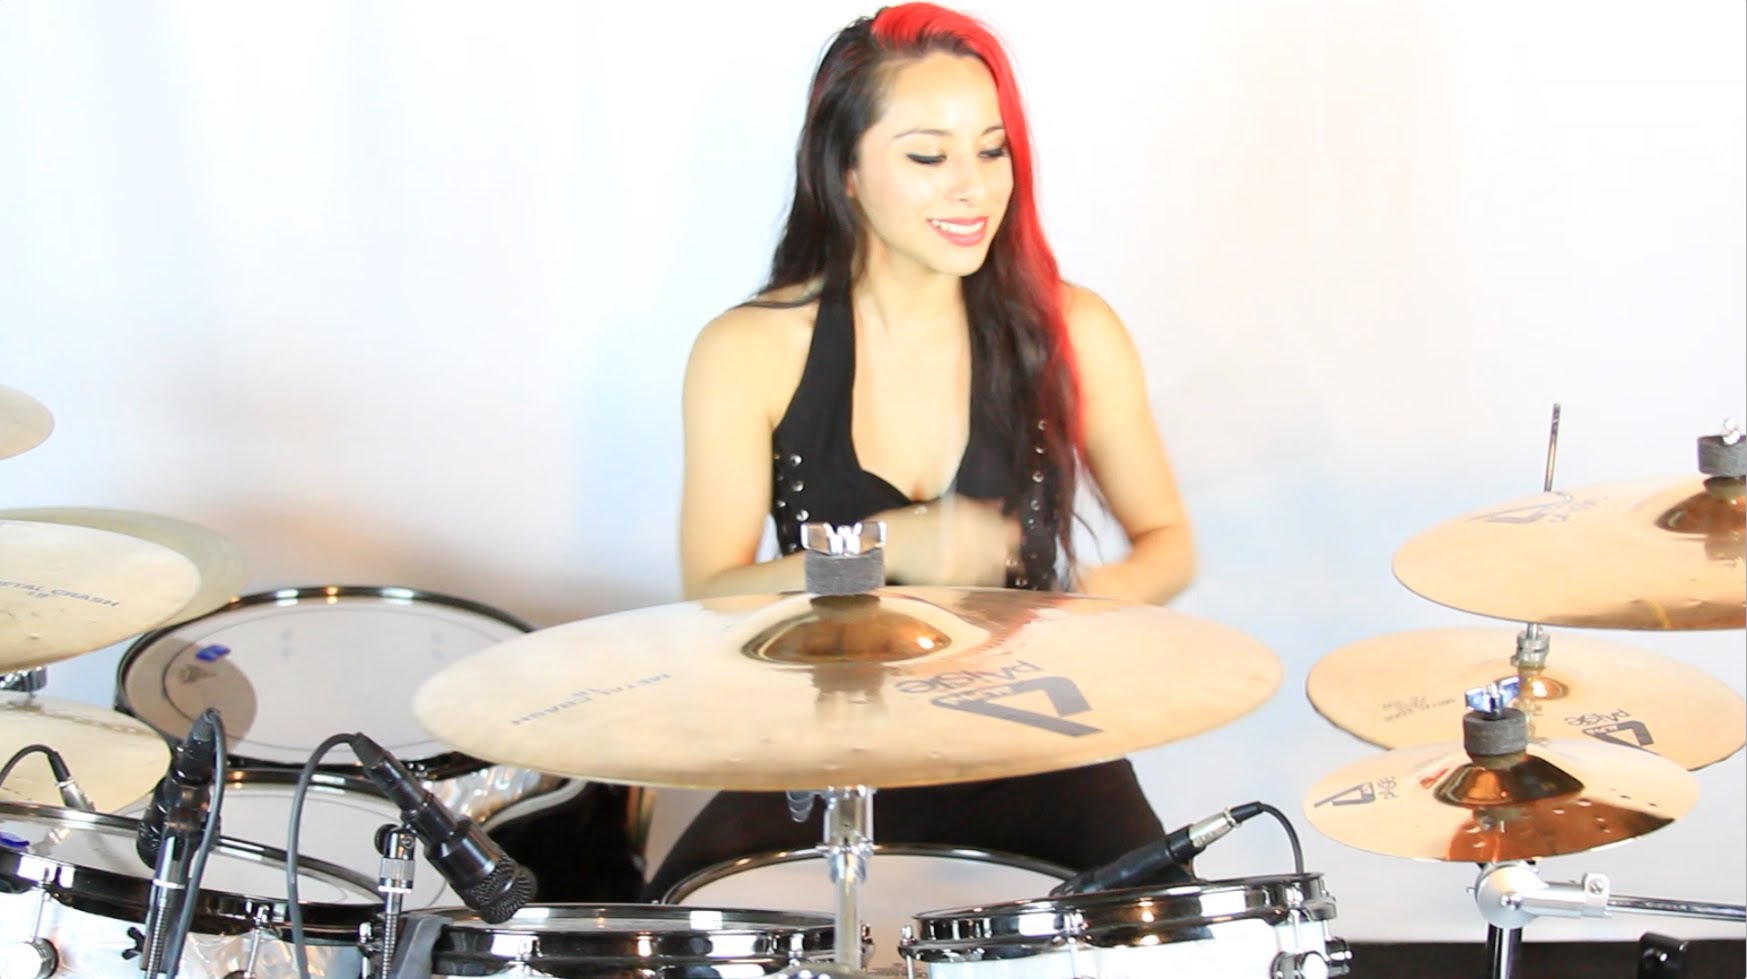 Lux Drummerette #1